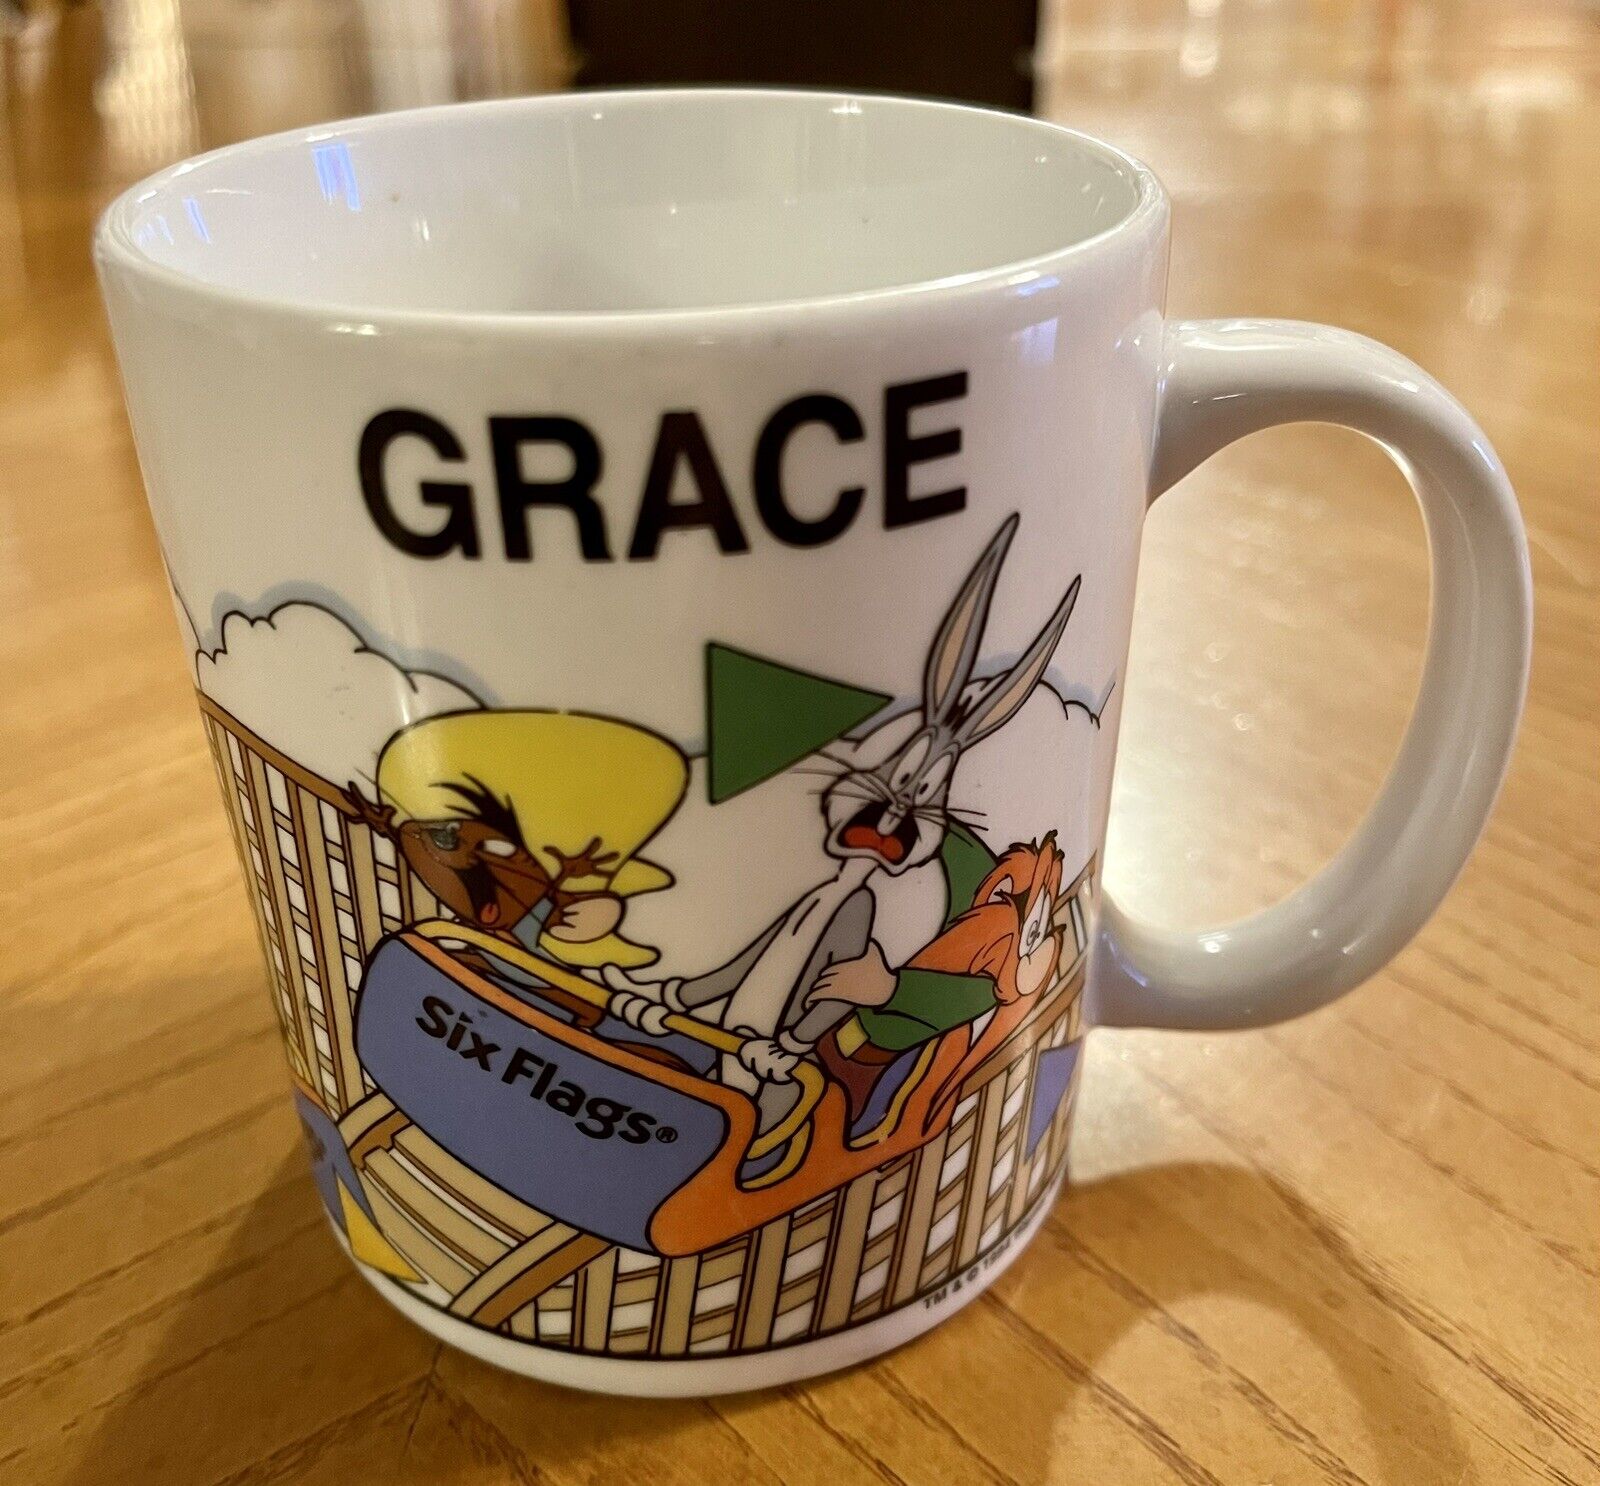 Six Flags “GRACE” Looney Tunes Souvenir Mug Cup By Linyi Warner Bros. 10 Oz